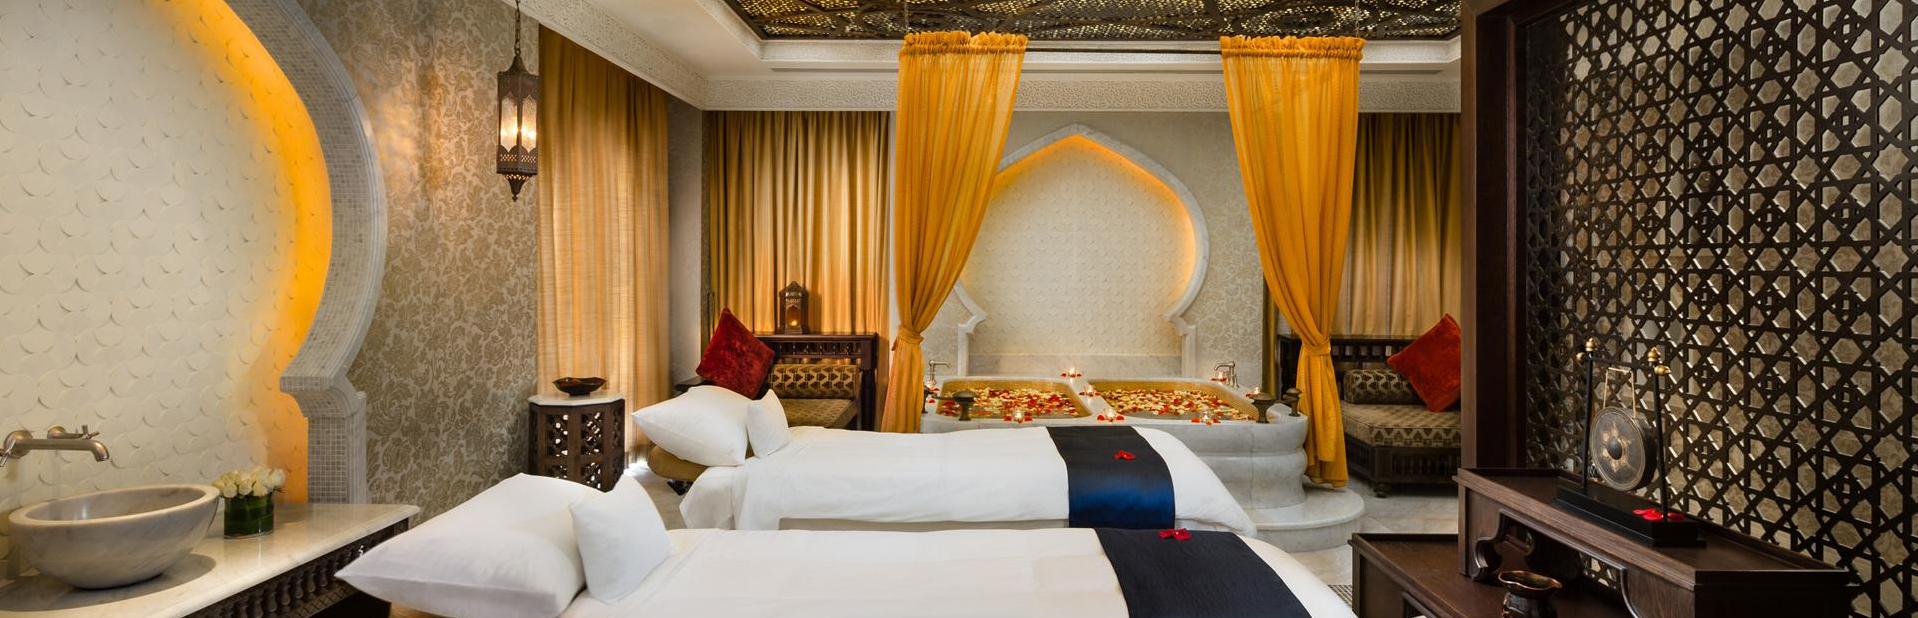 Отель Emirates Palace Hotel Abu Dhabi в Абу-Даби